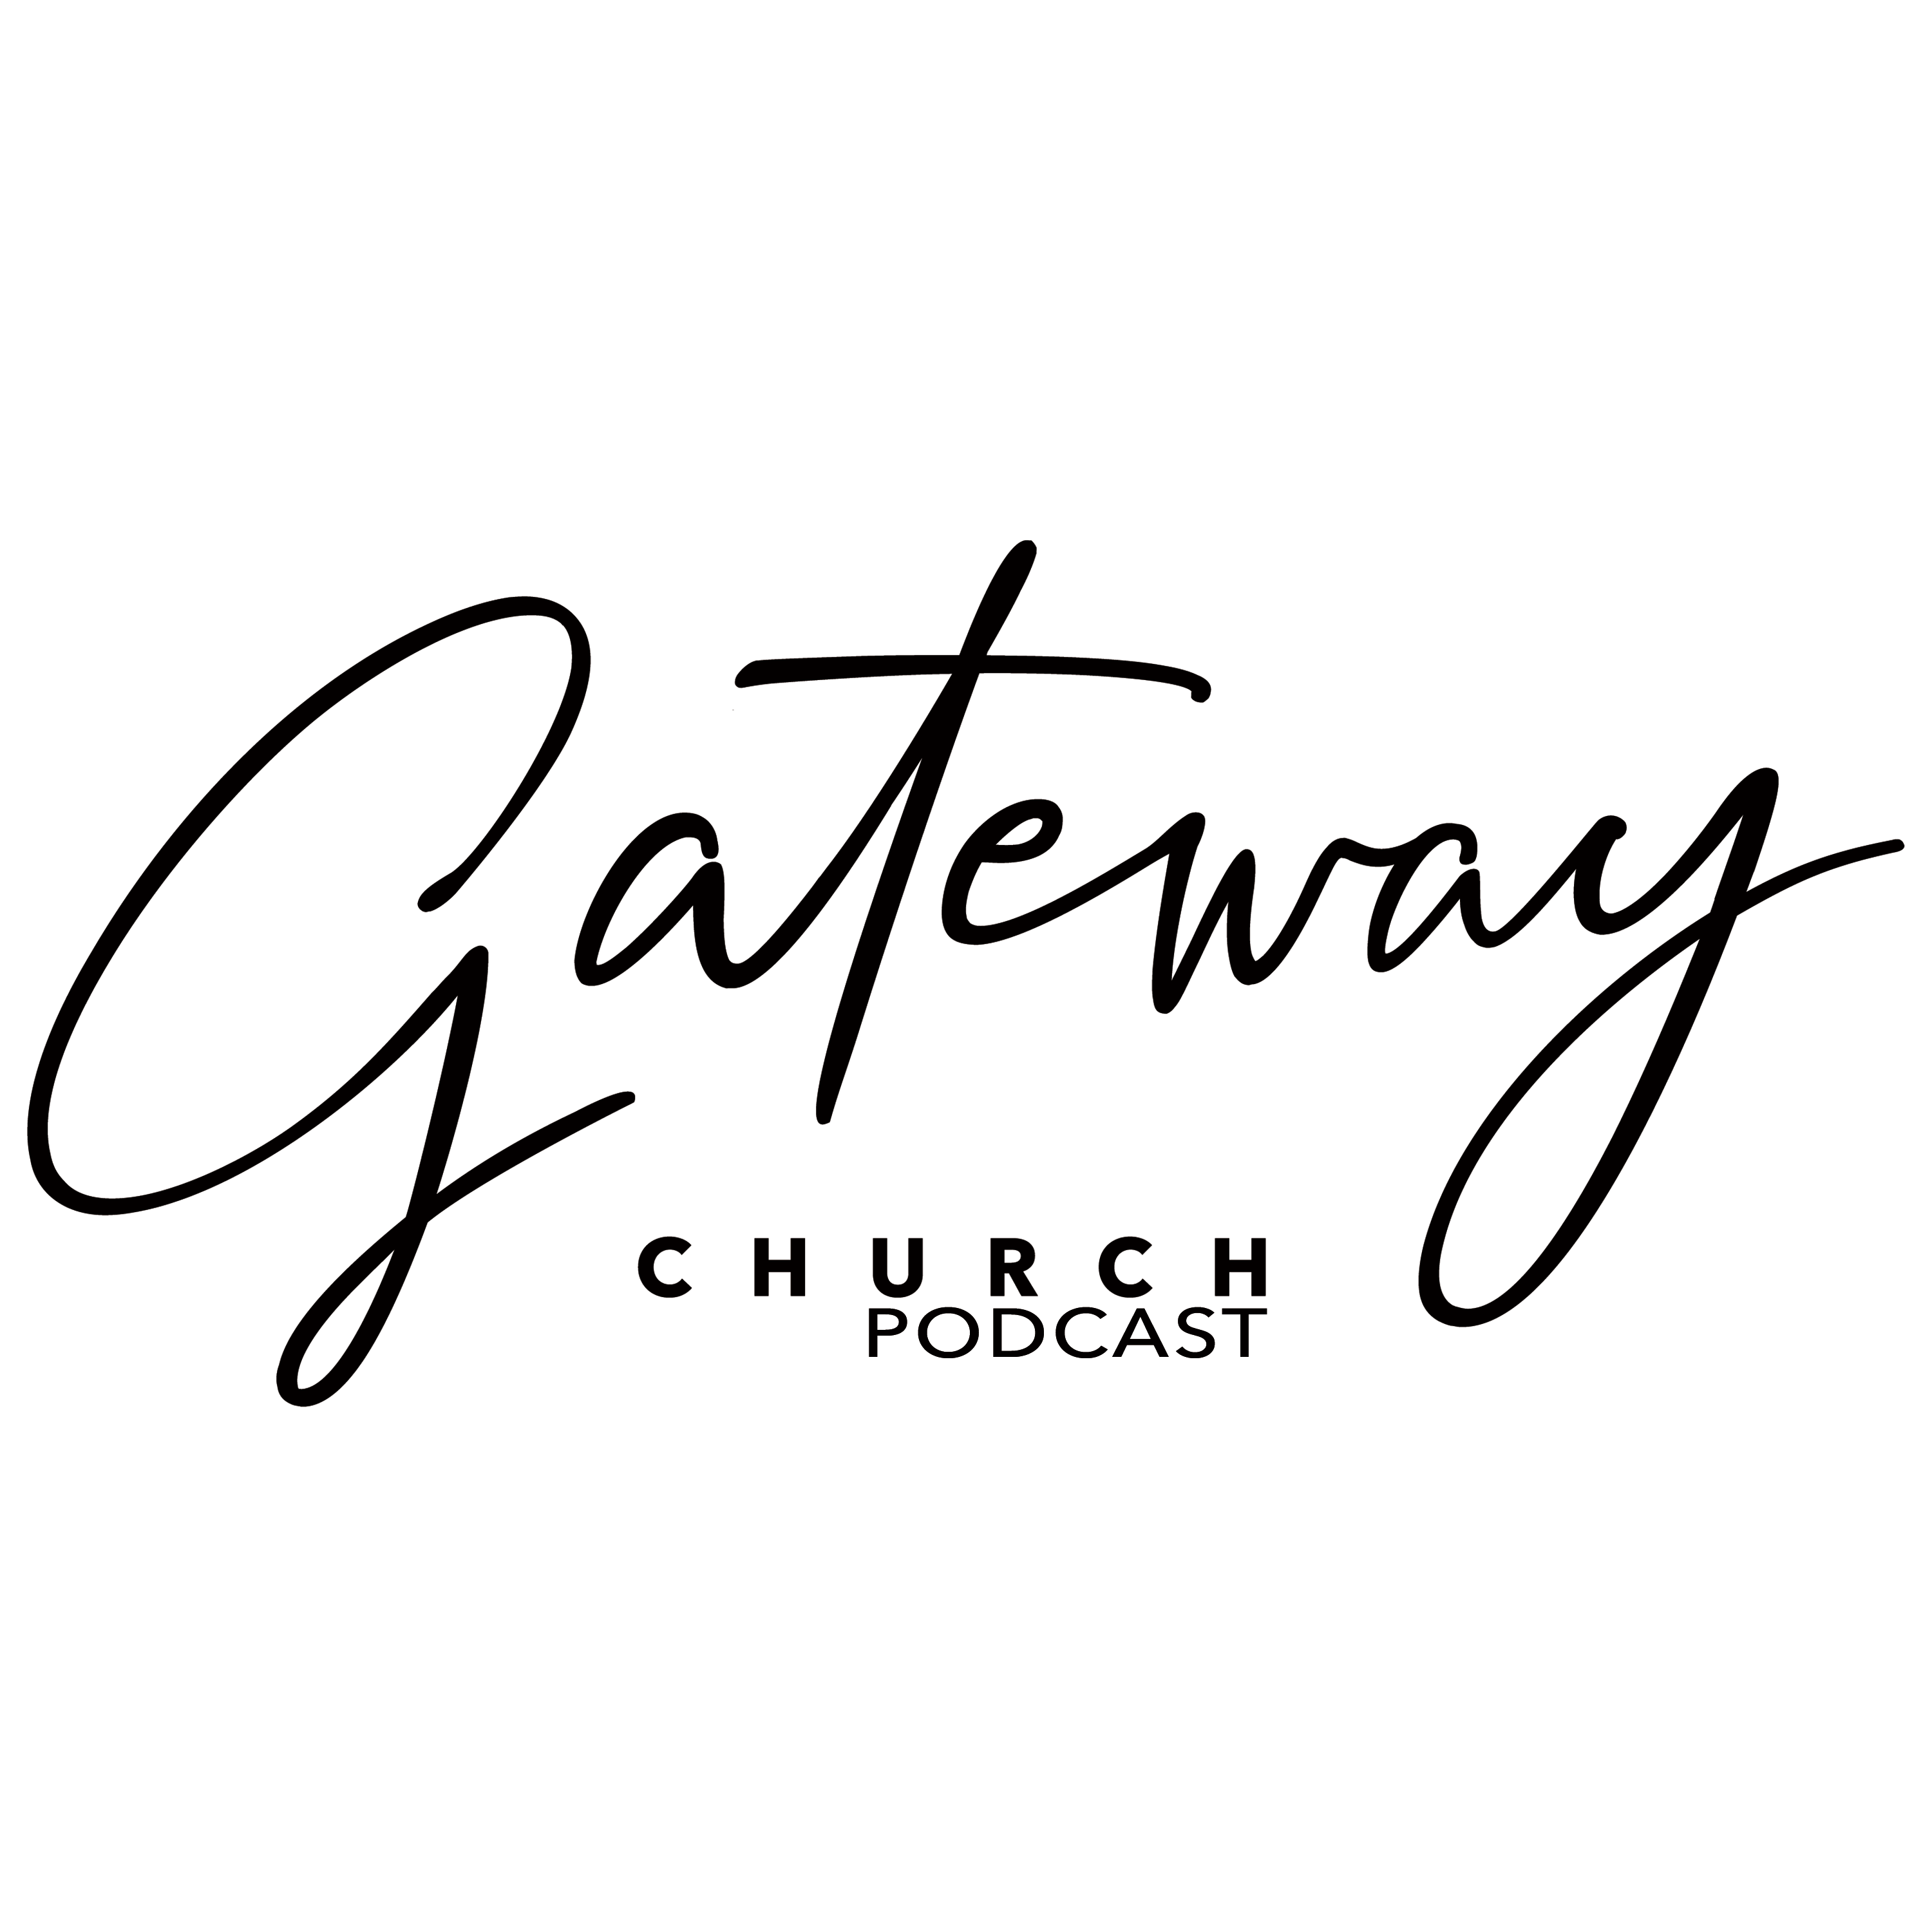 Gateway Church: Christian Sermons and Teaching